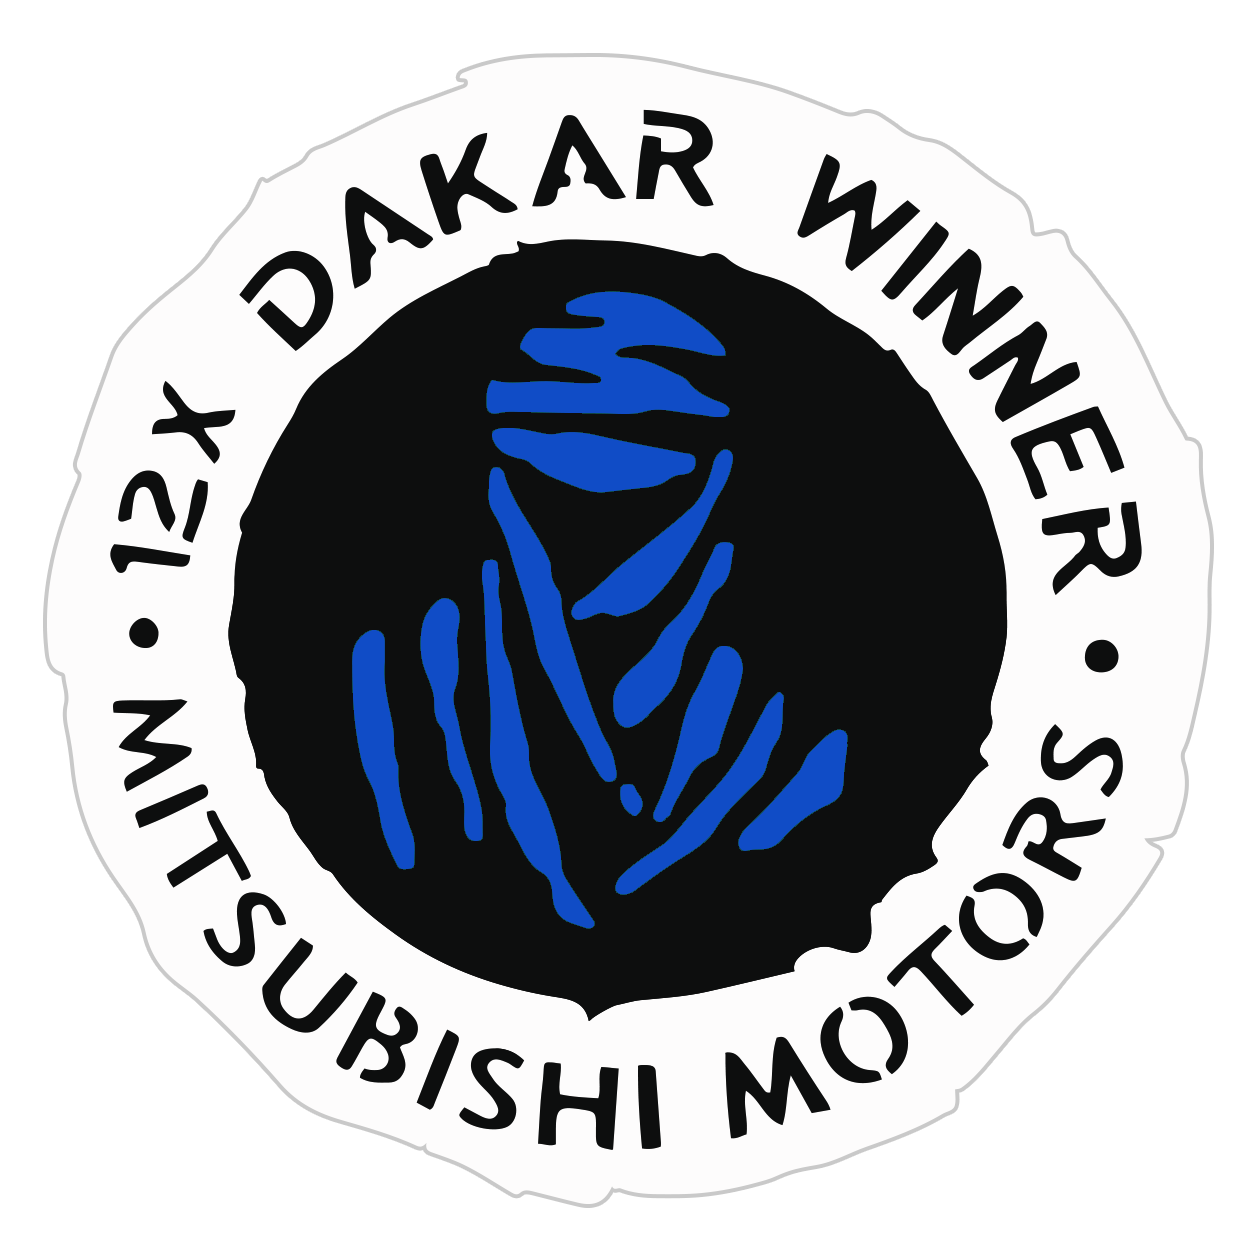 sticker logo Dakar 1